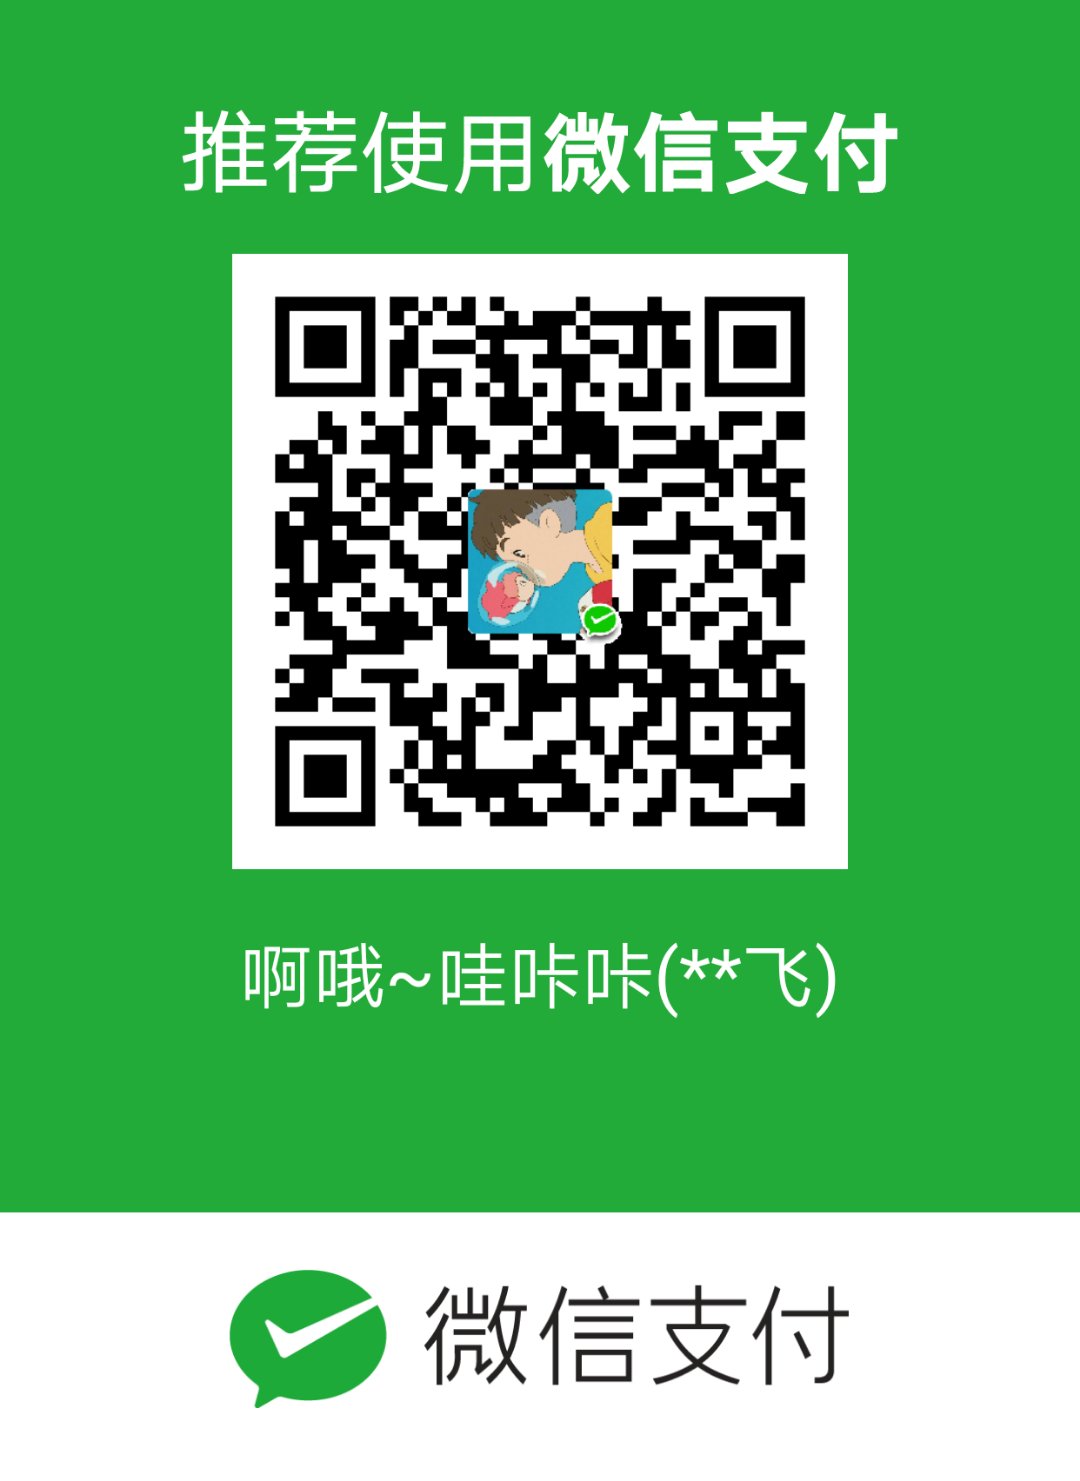 zhangdongfei WeChat Pay